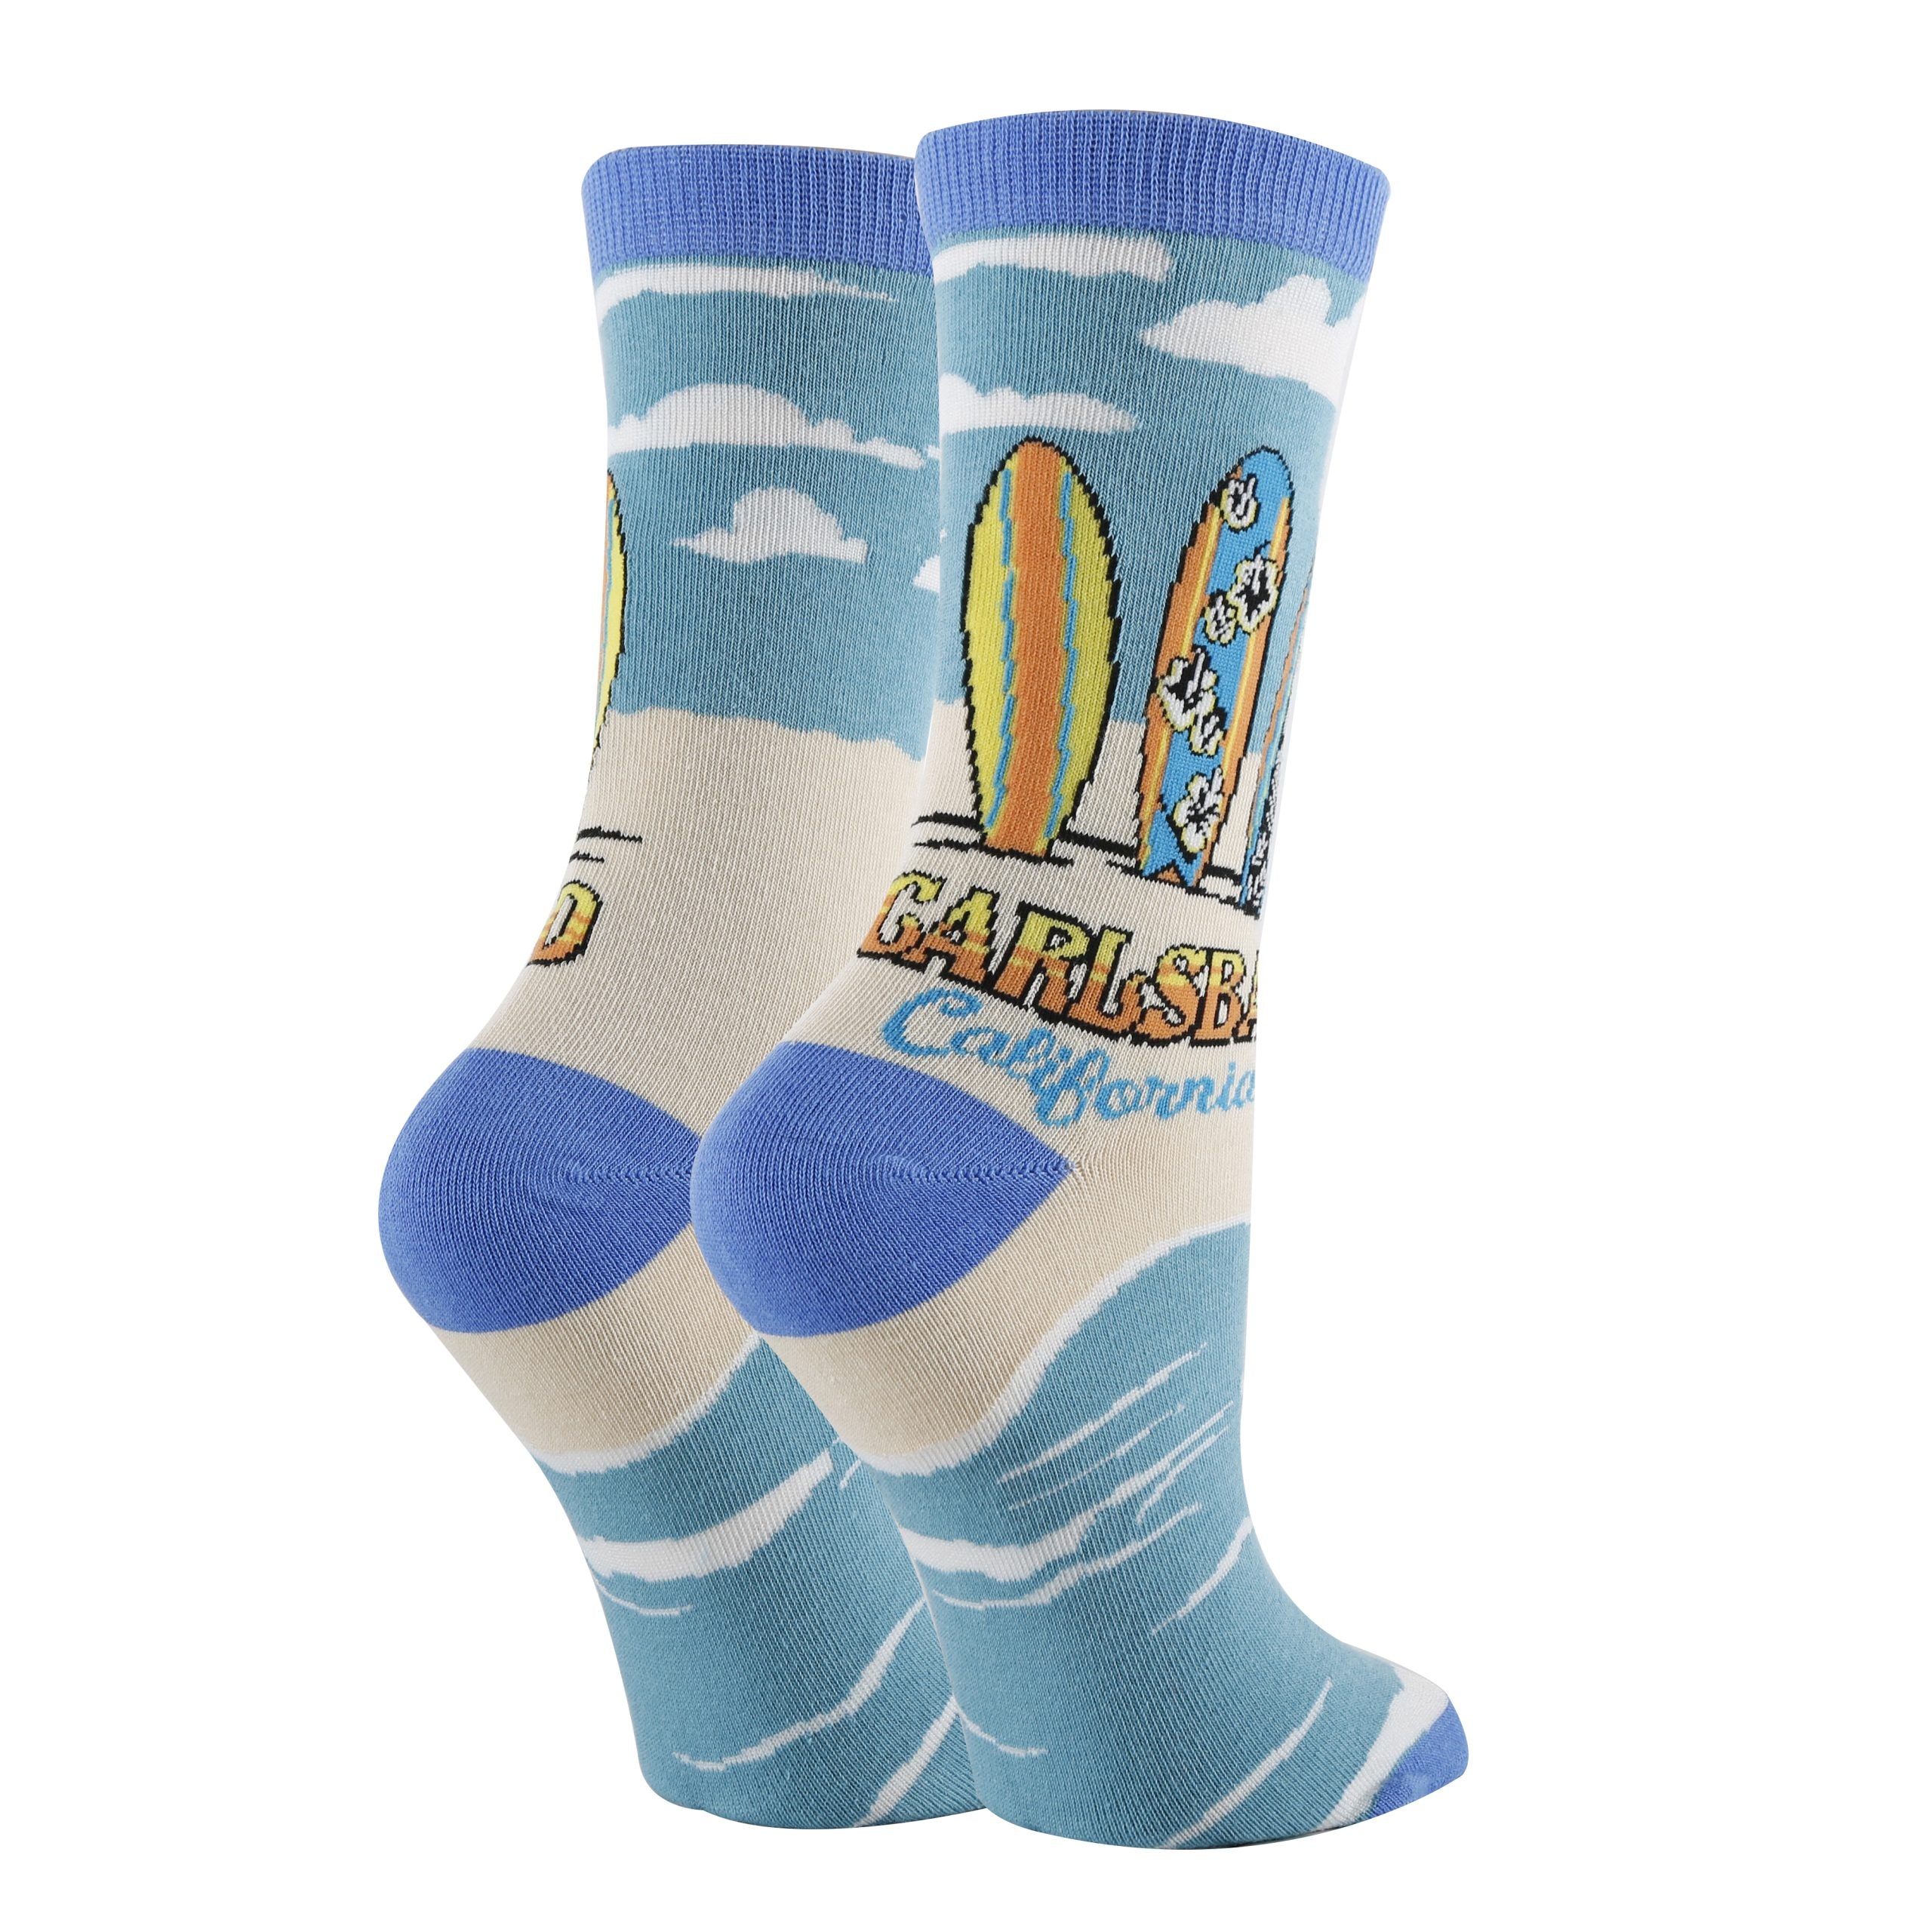 Calrsbad Socks - 0